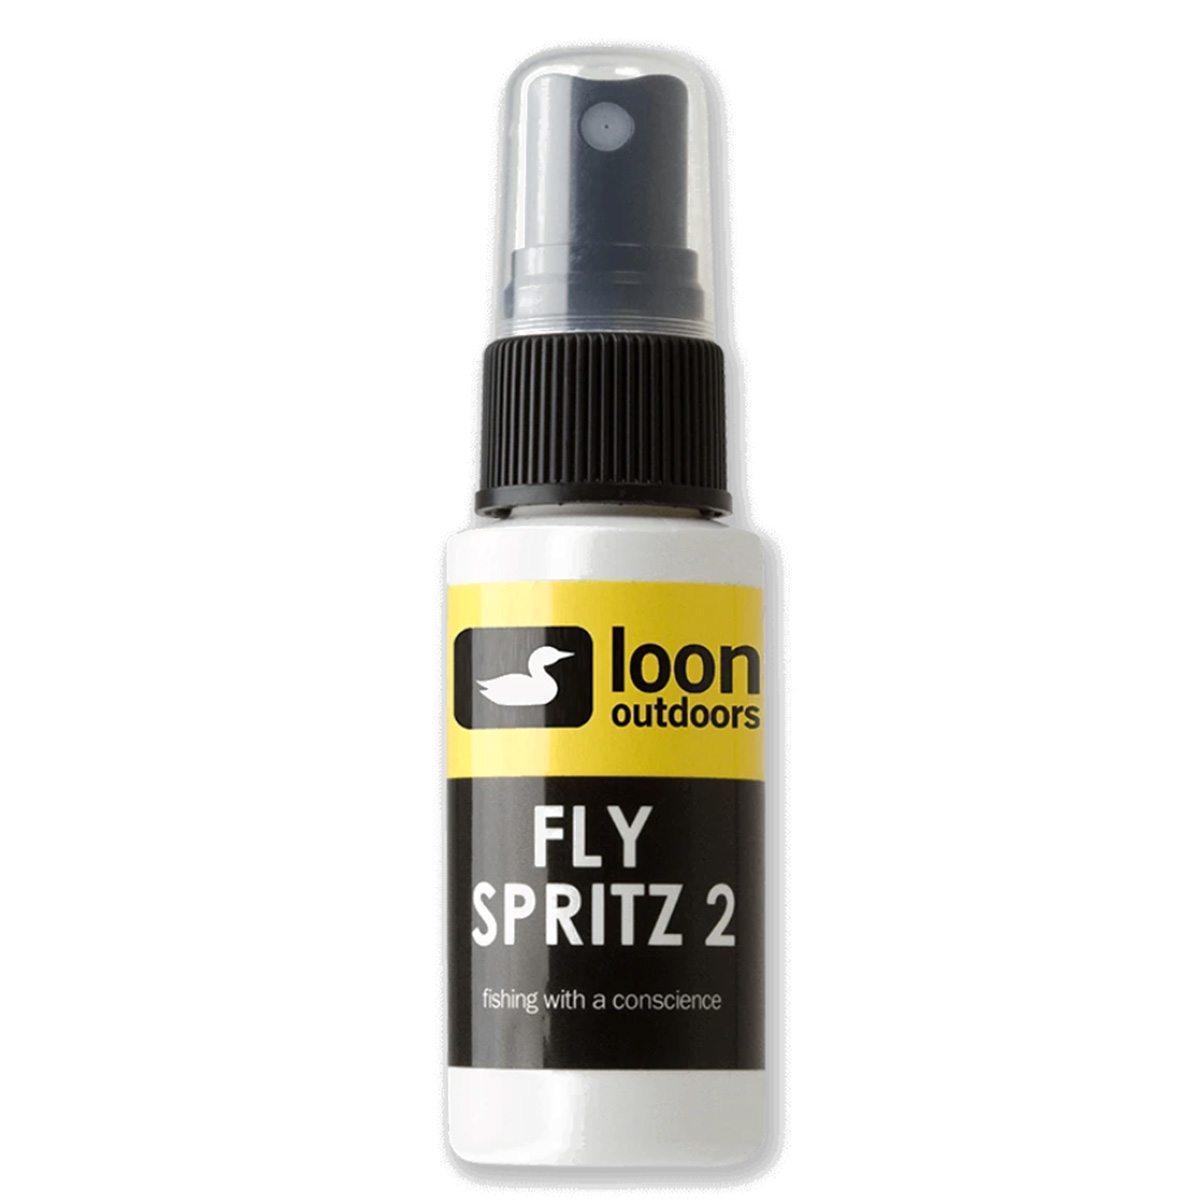 Loon Fly Spritz